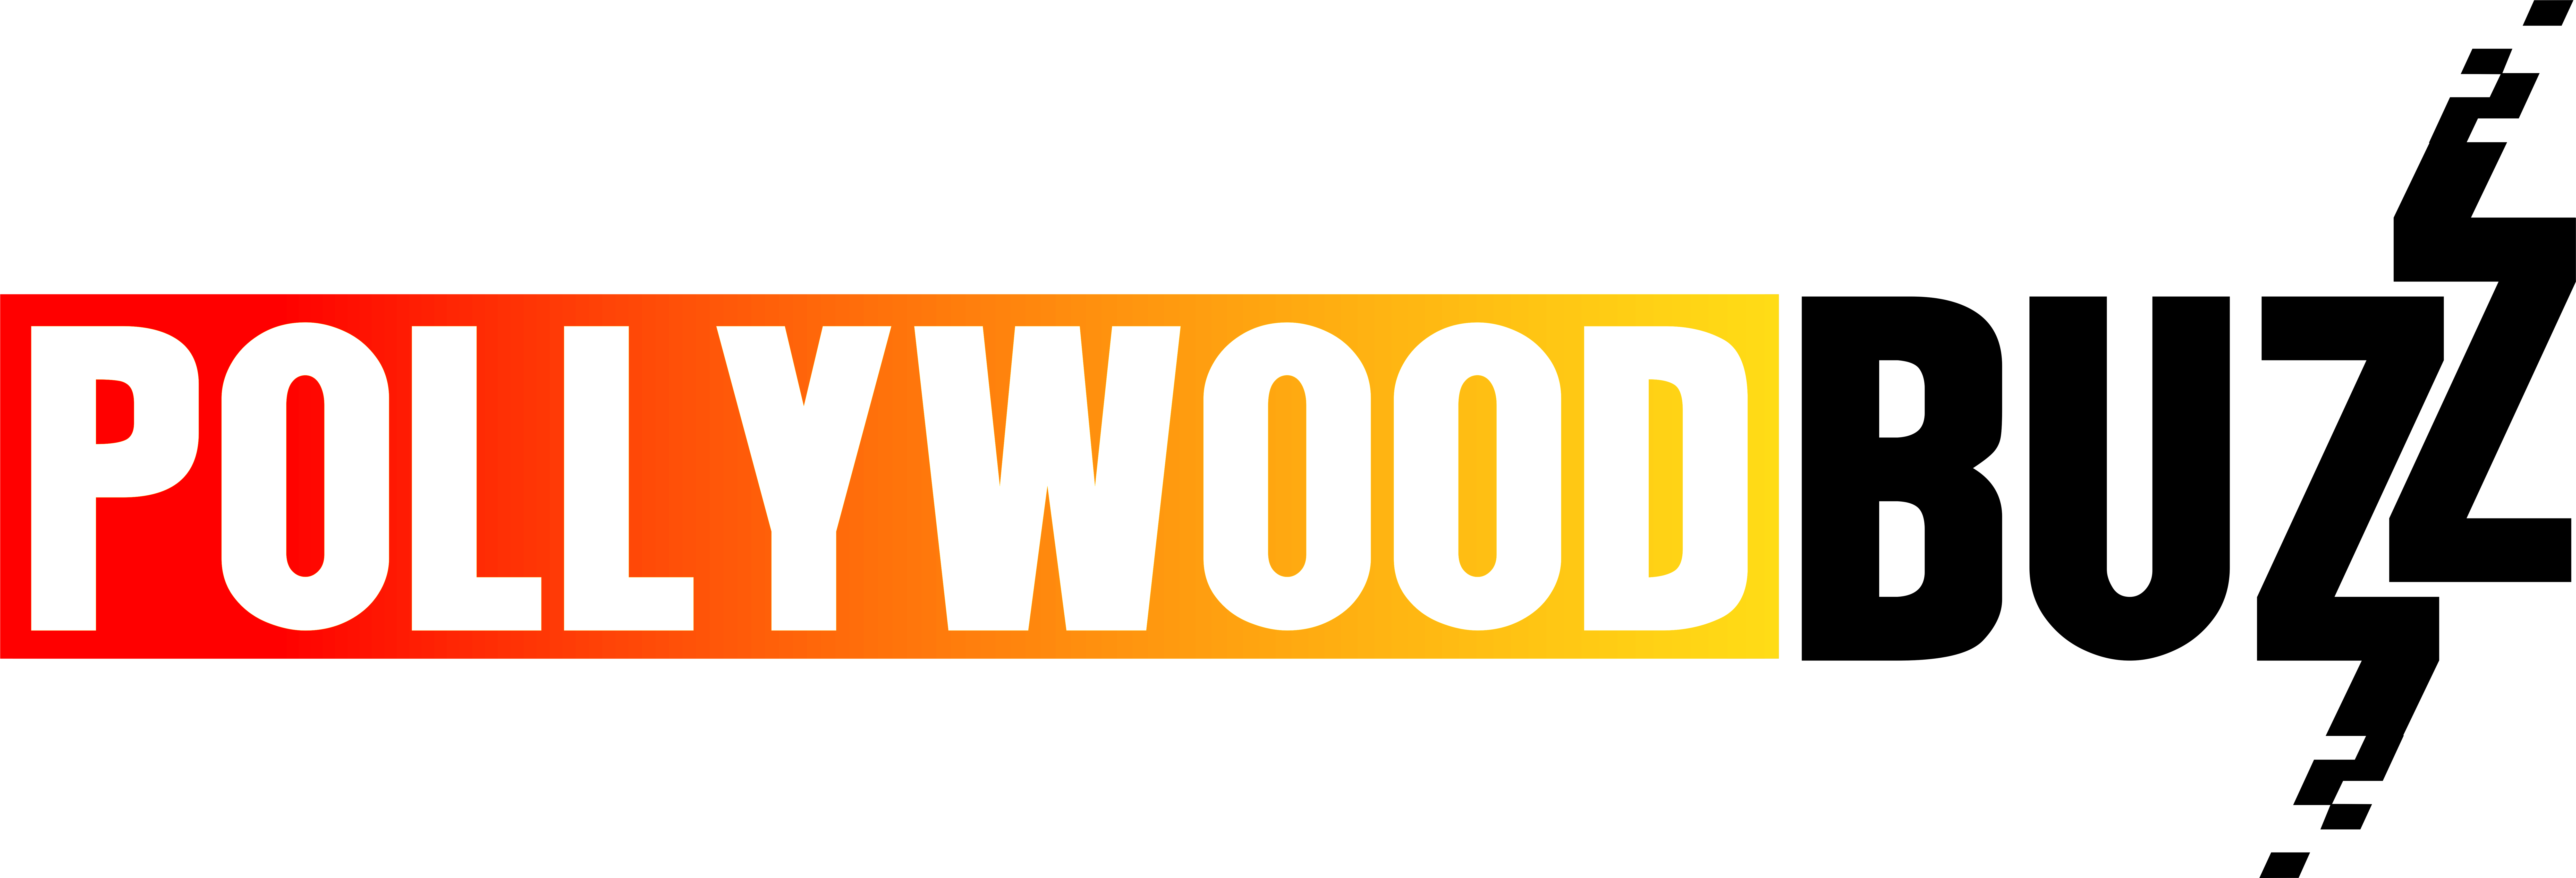 Pollywood Buzz Entertainment Website